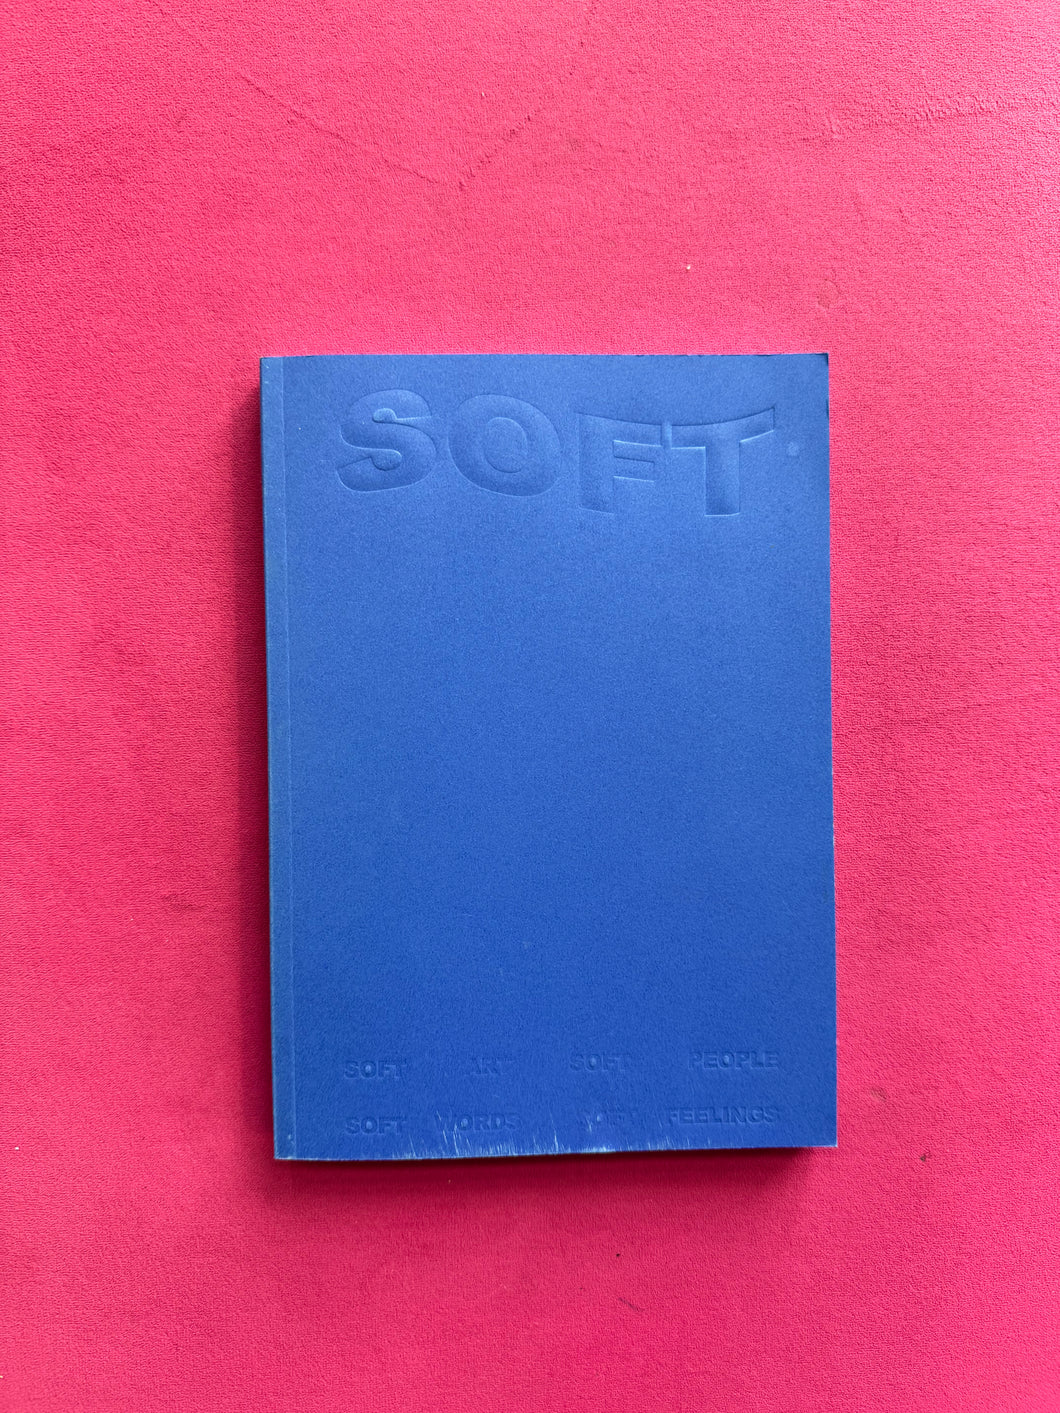 Soft Quarterly - 5th Edition